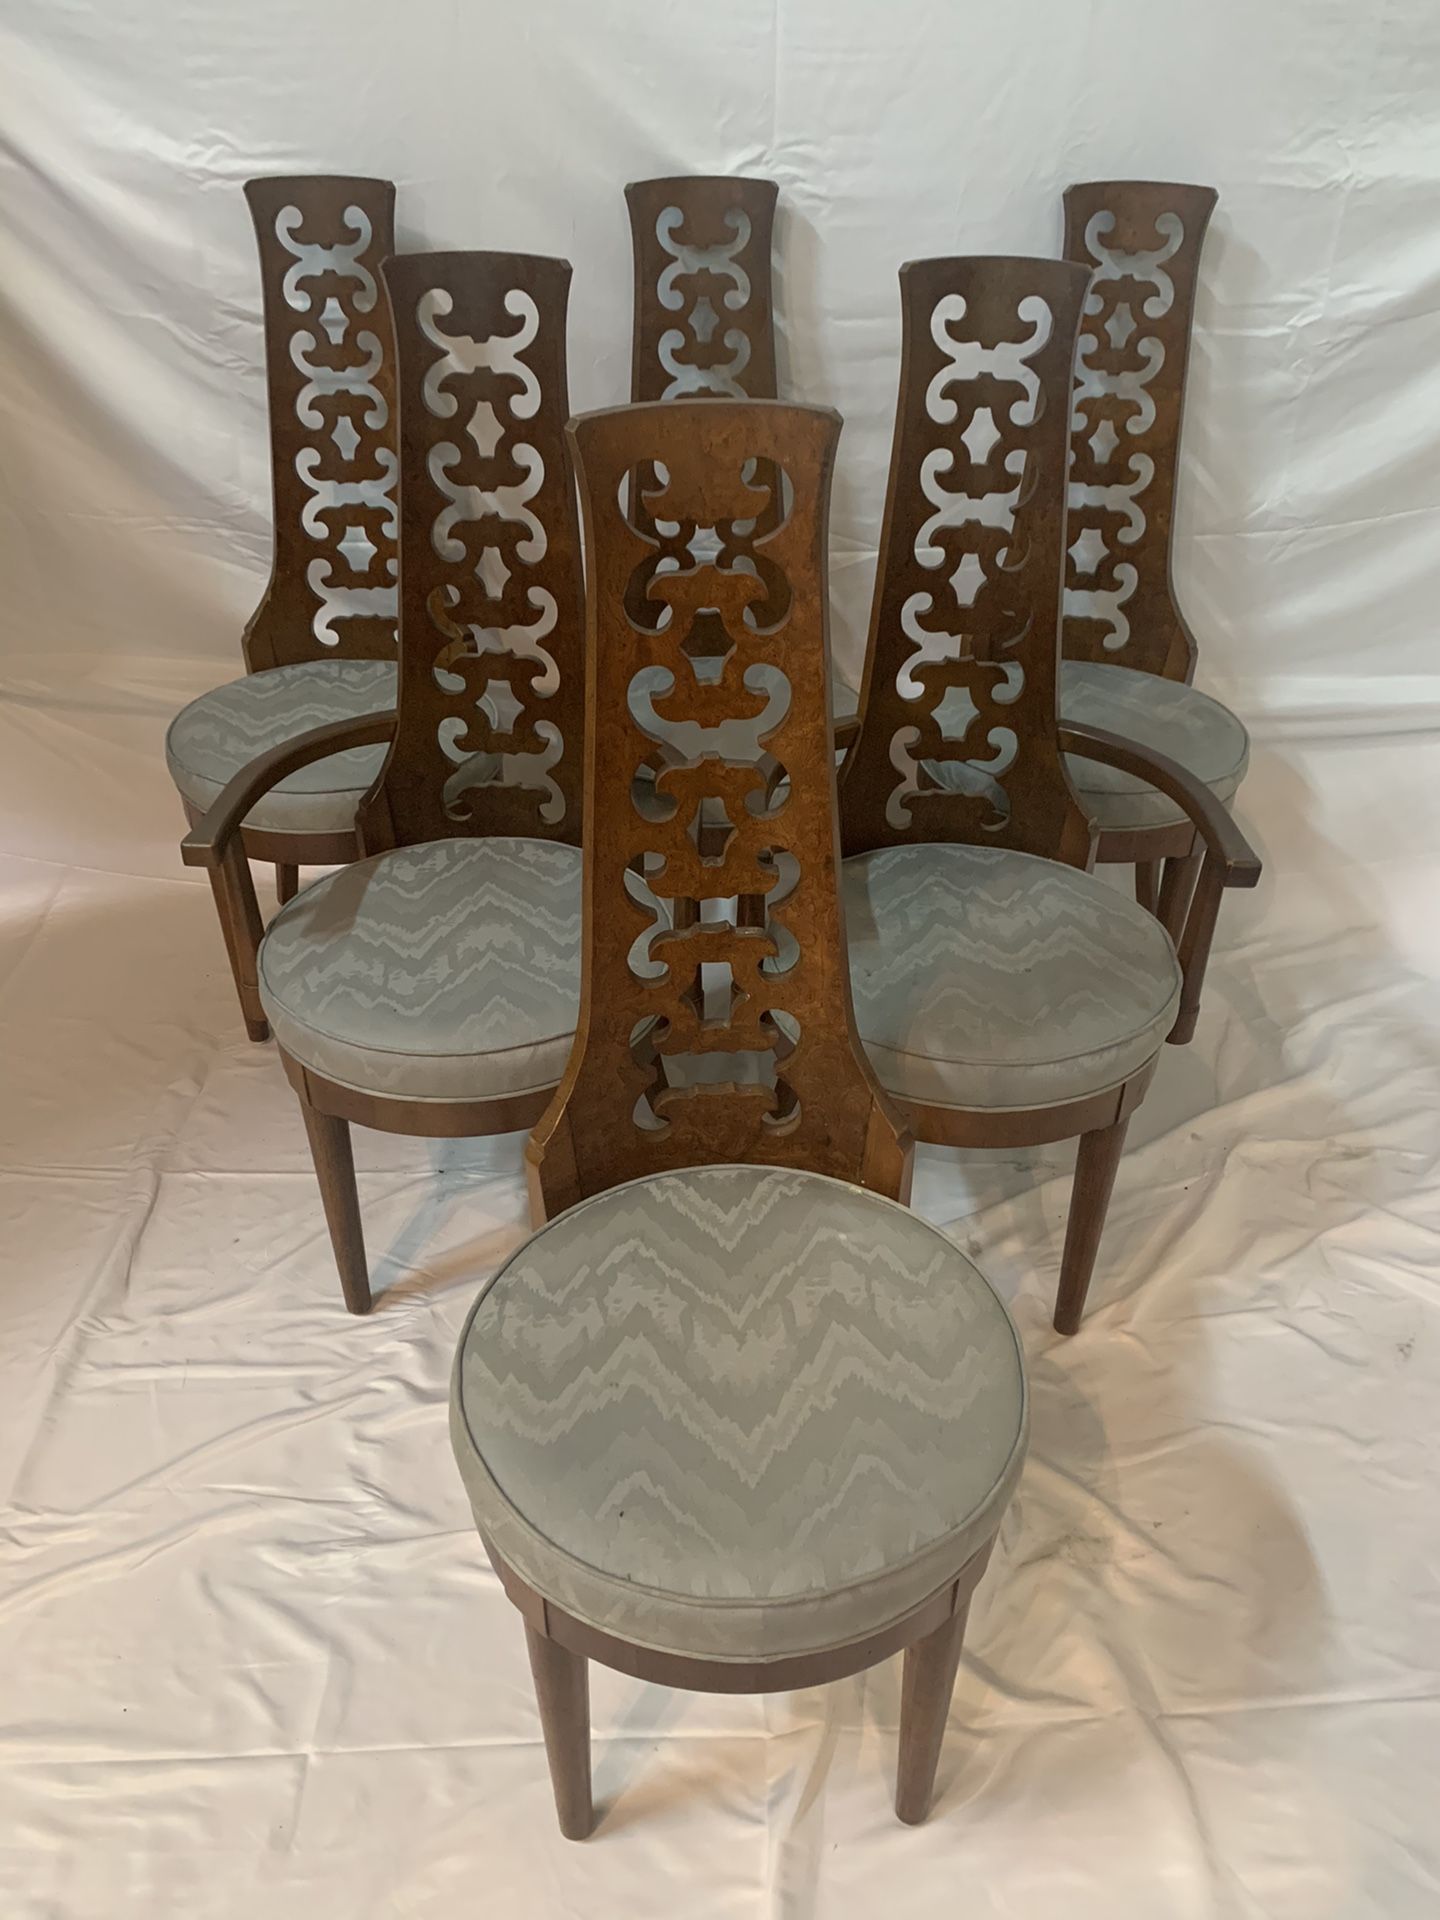 1968 Thomasville Chairs